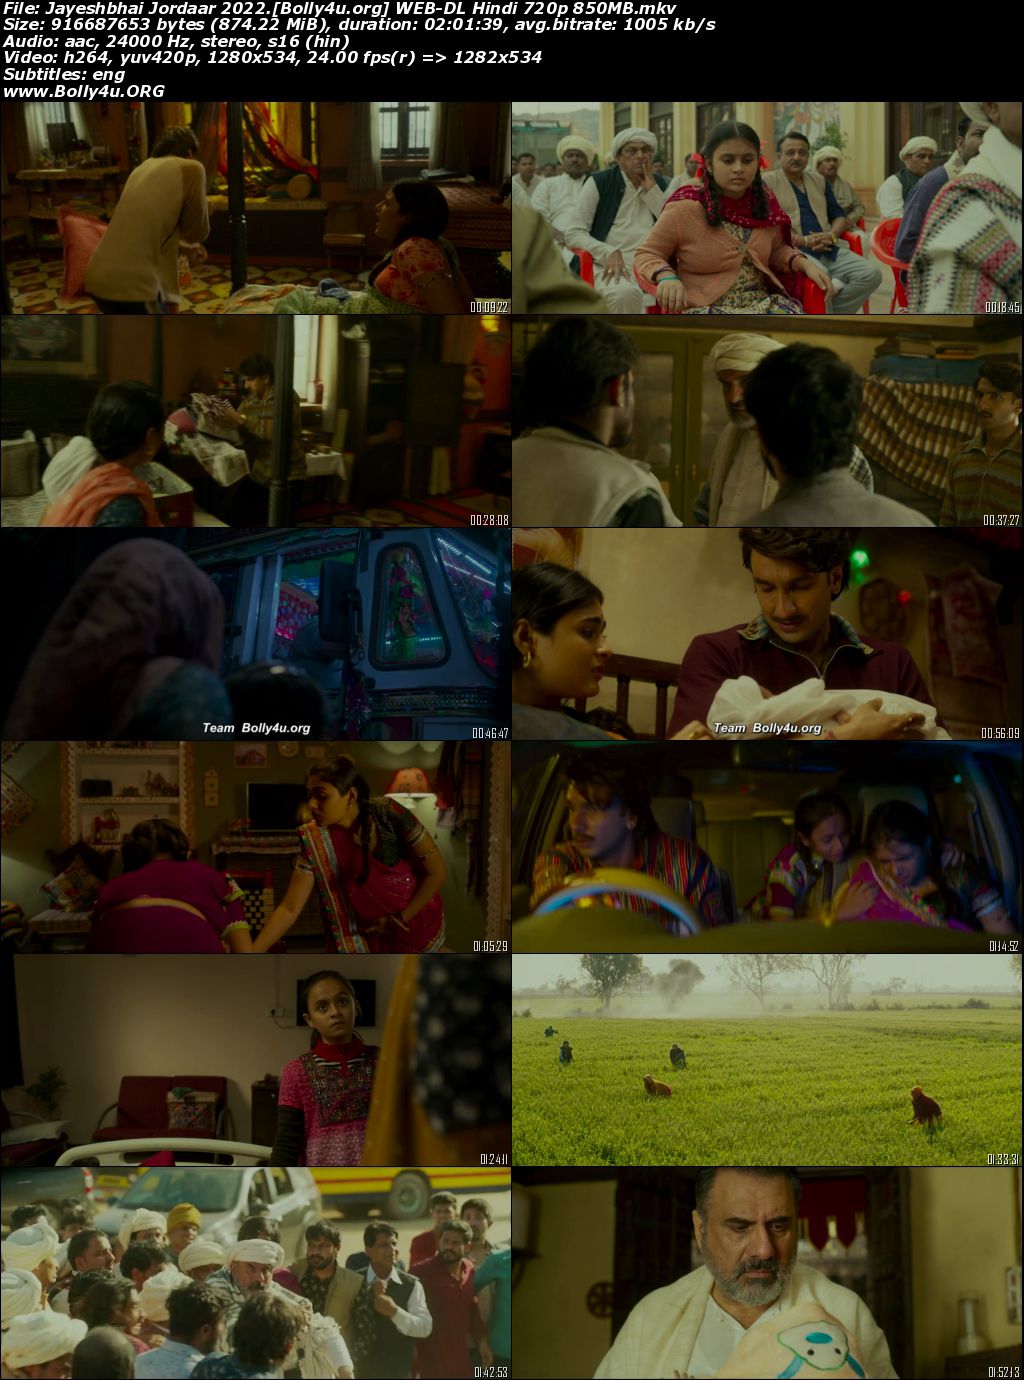 Jayeshbhai Jordaar 2022 WEB-DL Hindi Movie Download 720p 480p